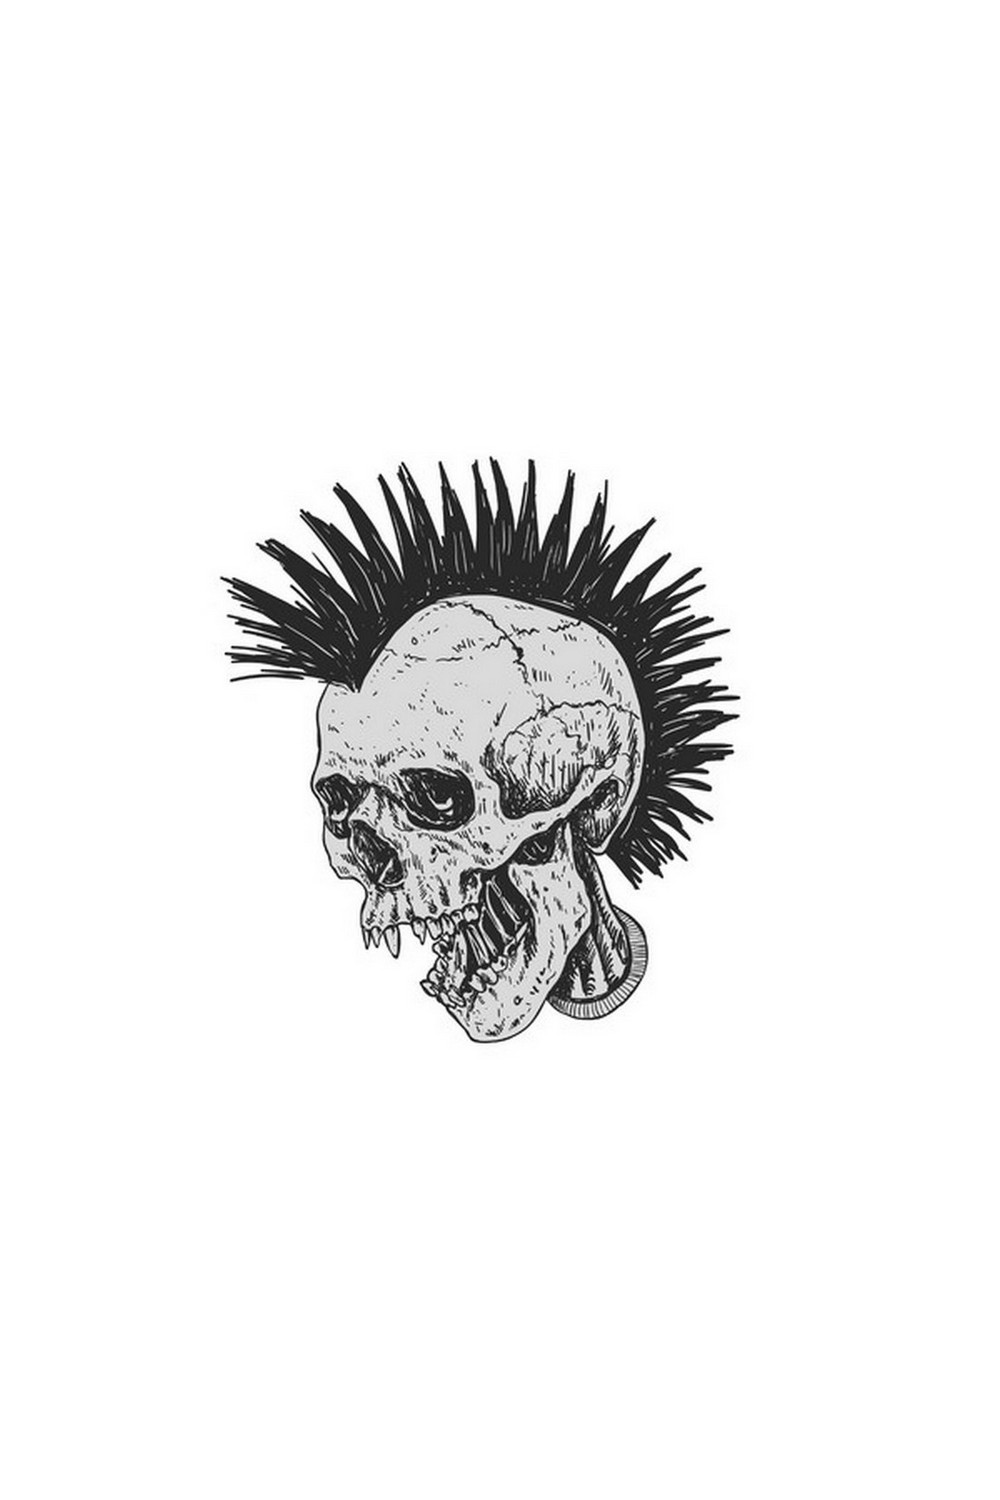 Skull Raiders Logo Skull in Different Look Logo pinterest image.